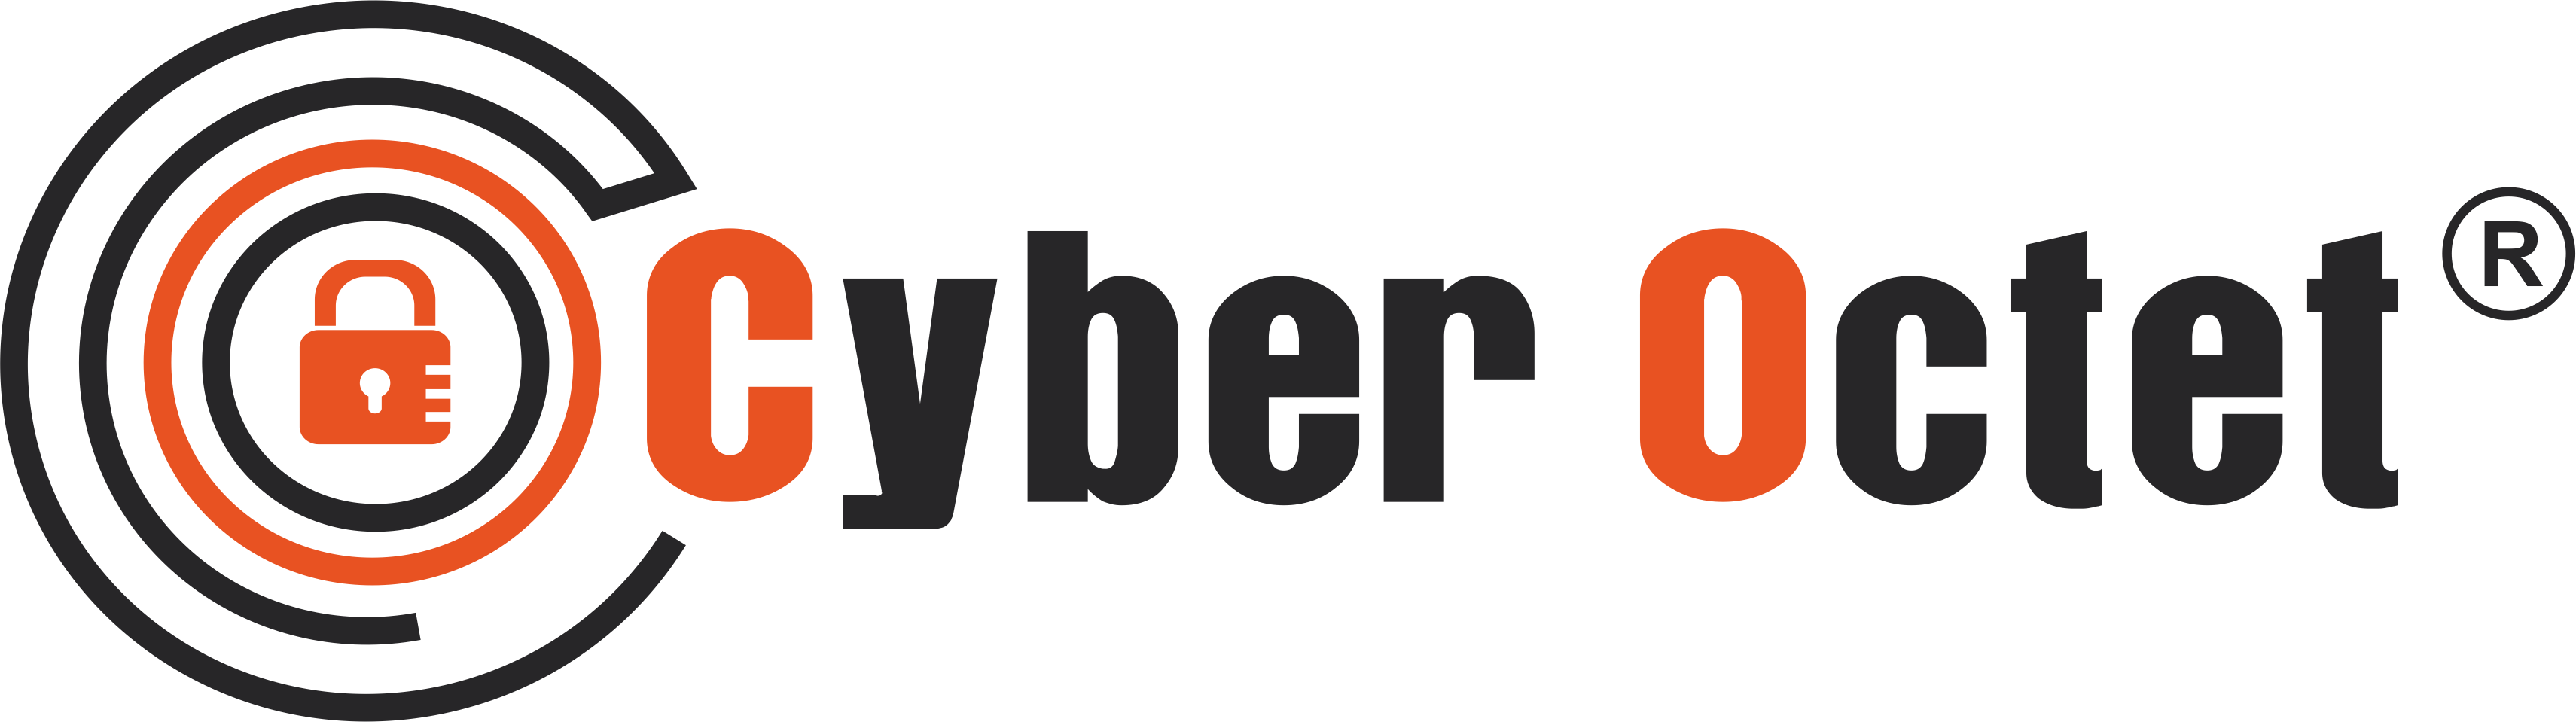 cyber-octet-logo-new